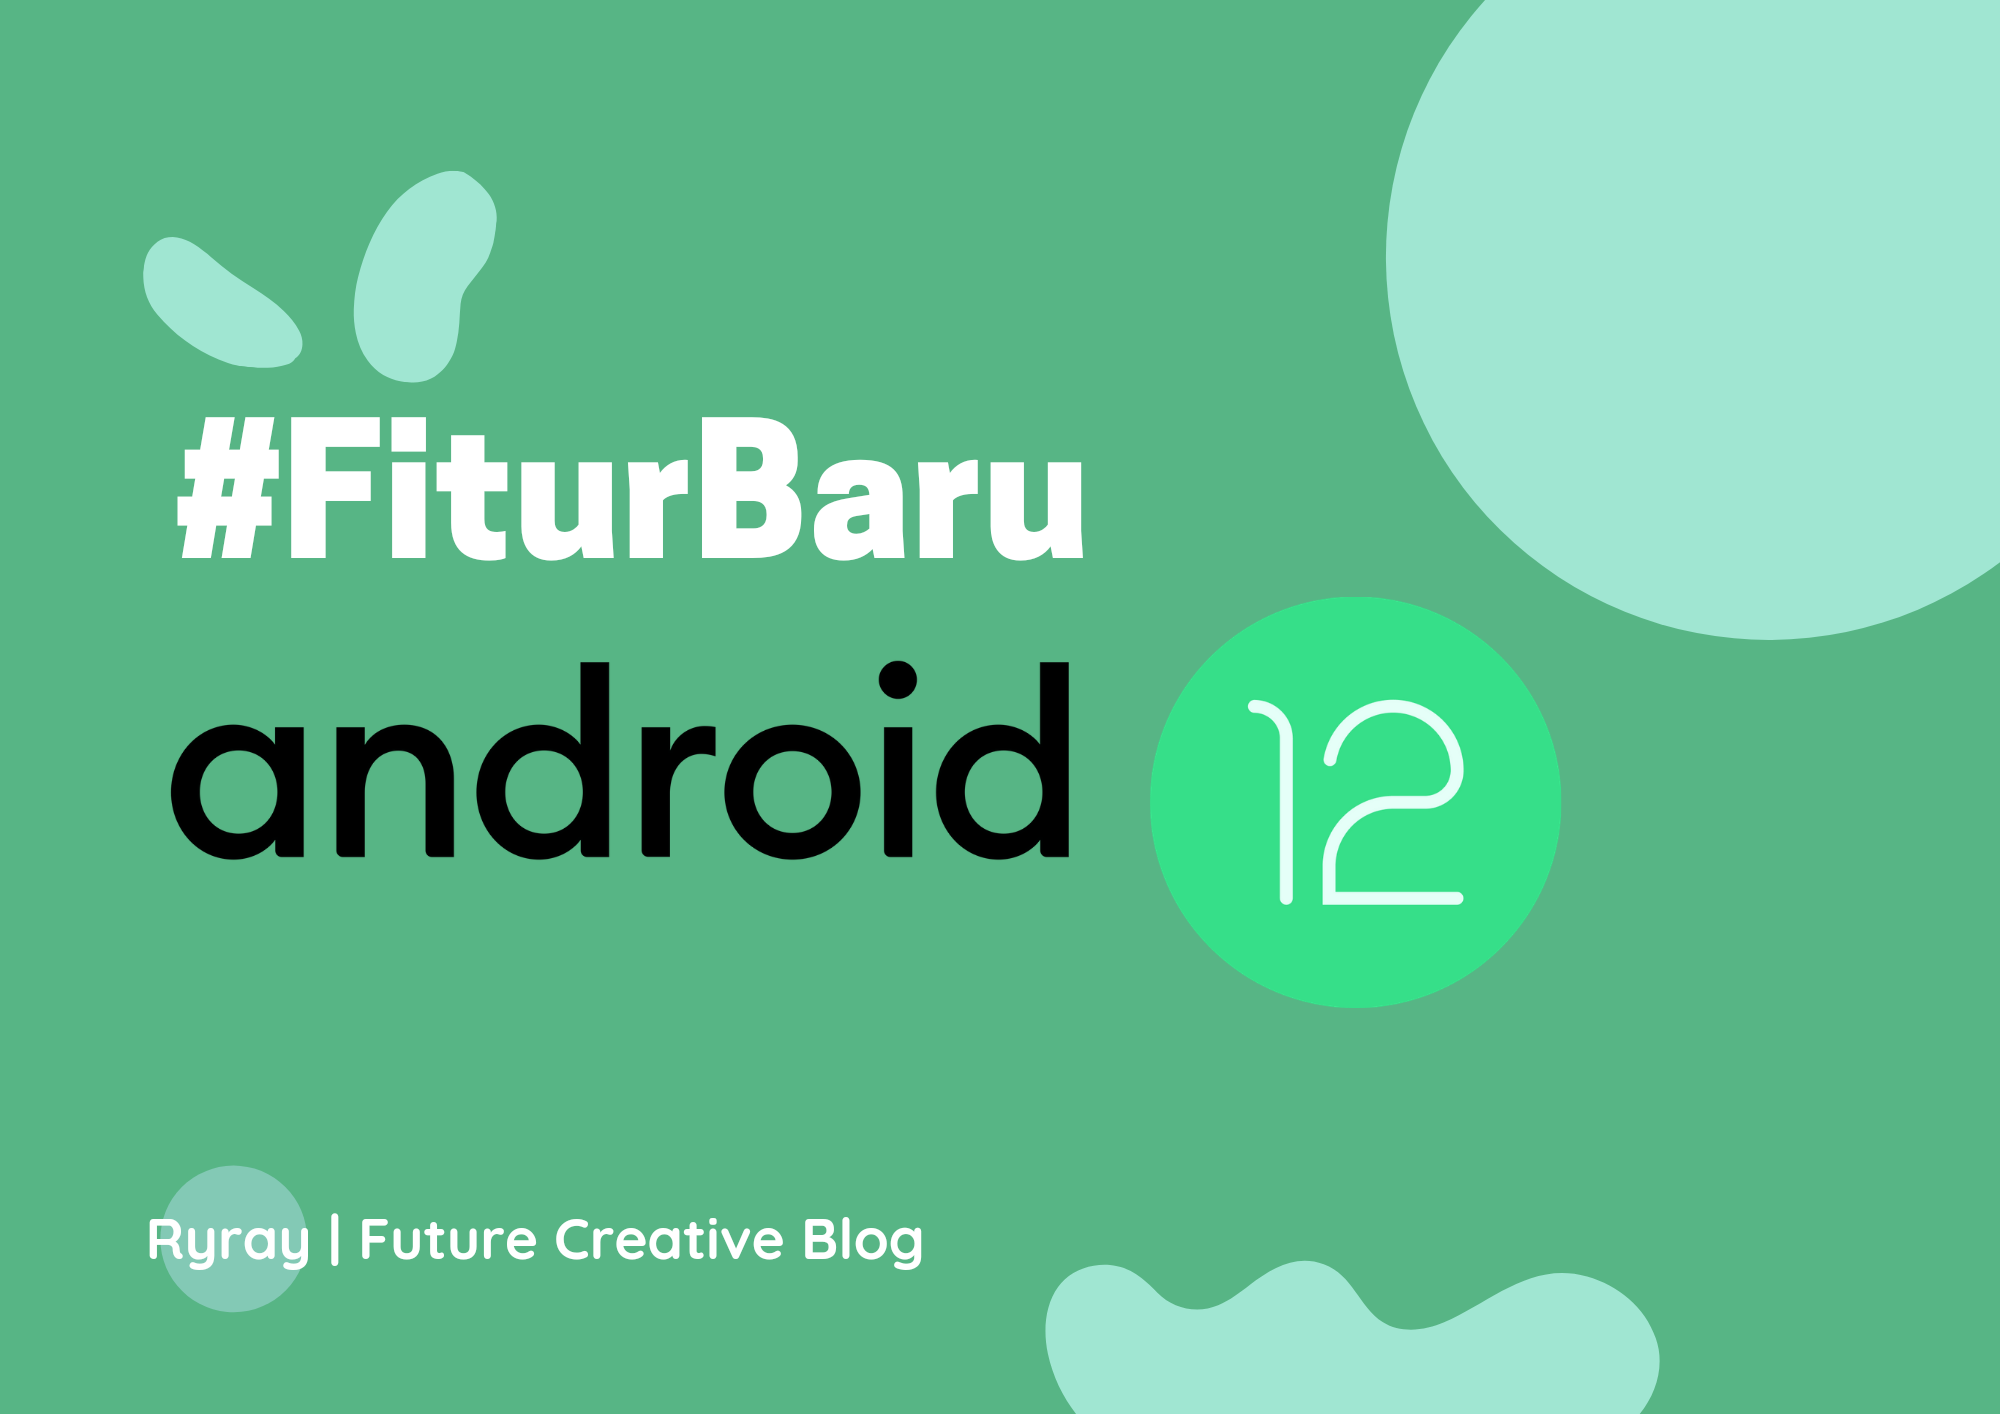 Fitur Baru Android 12